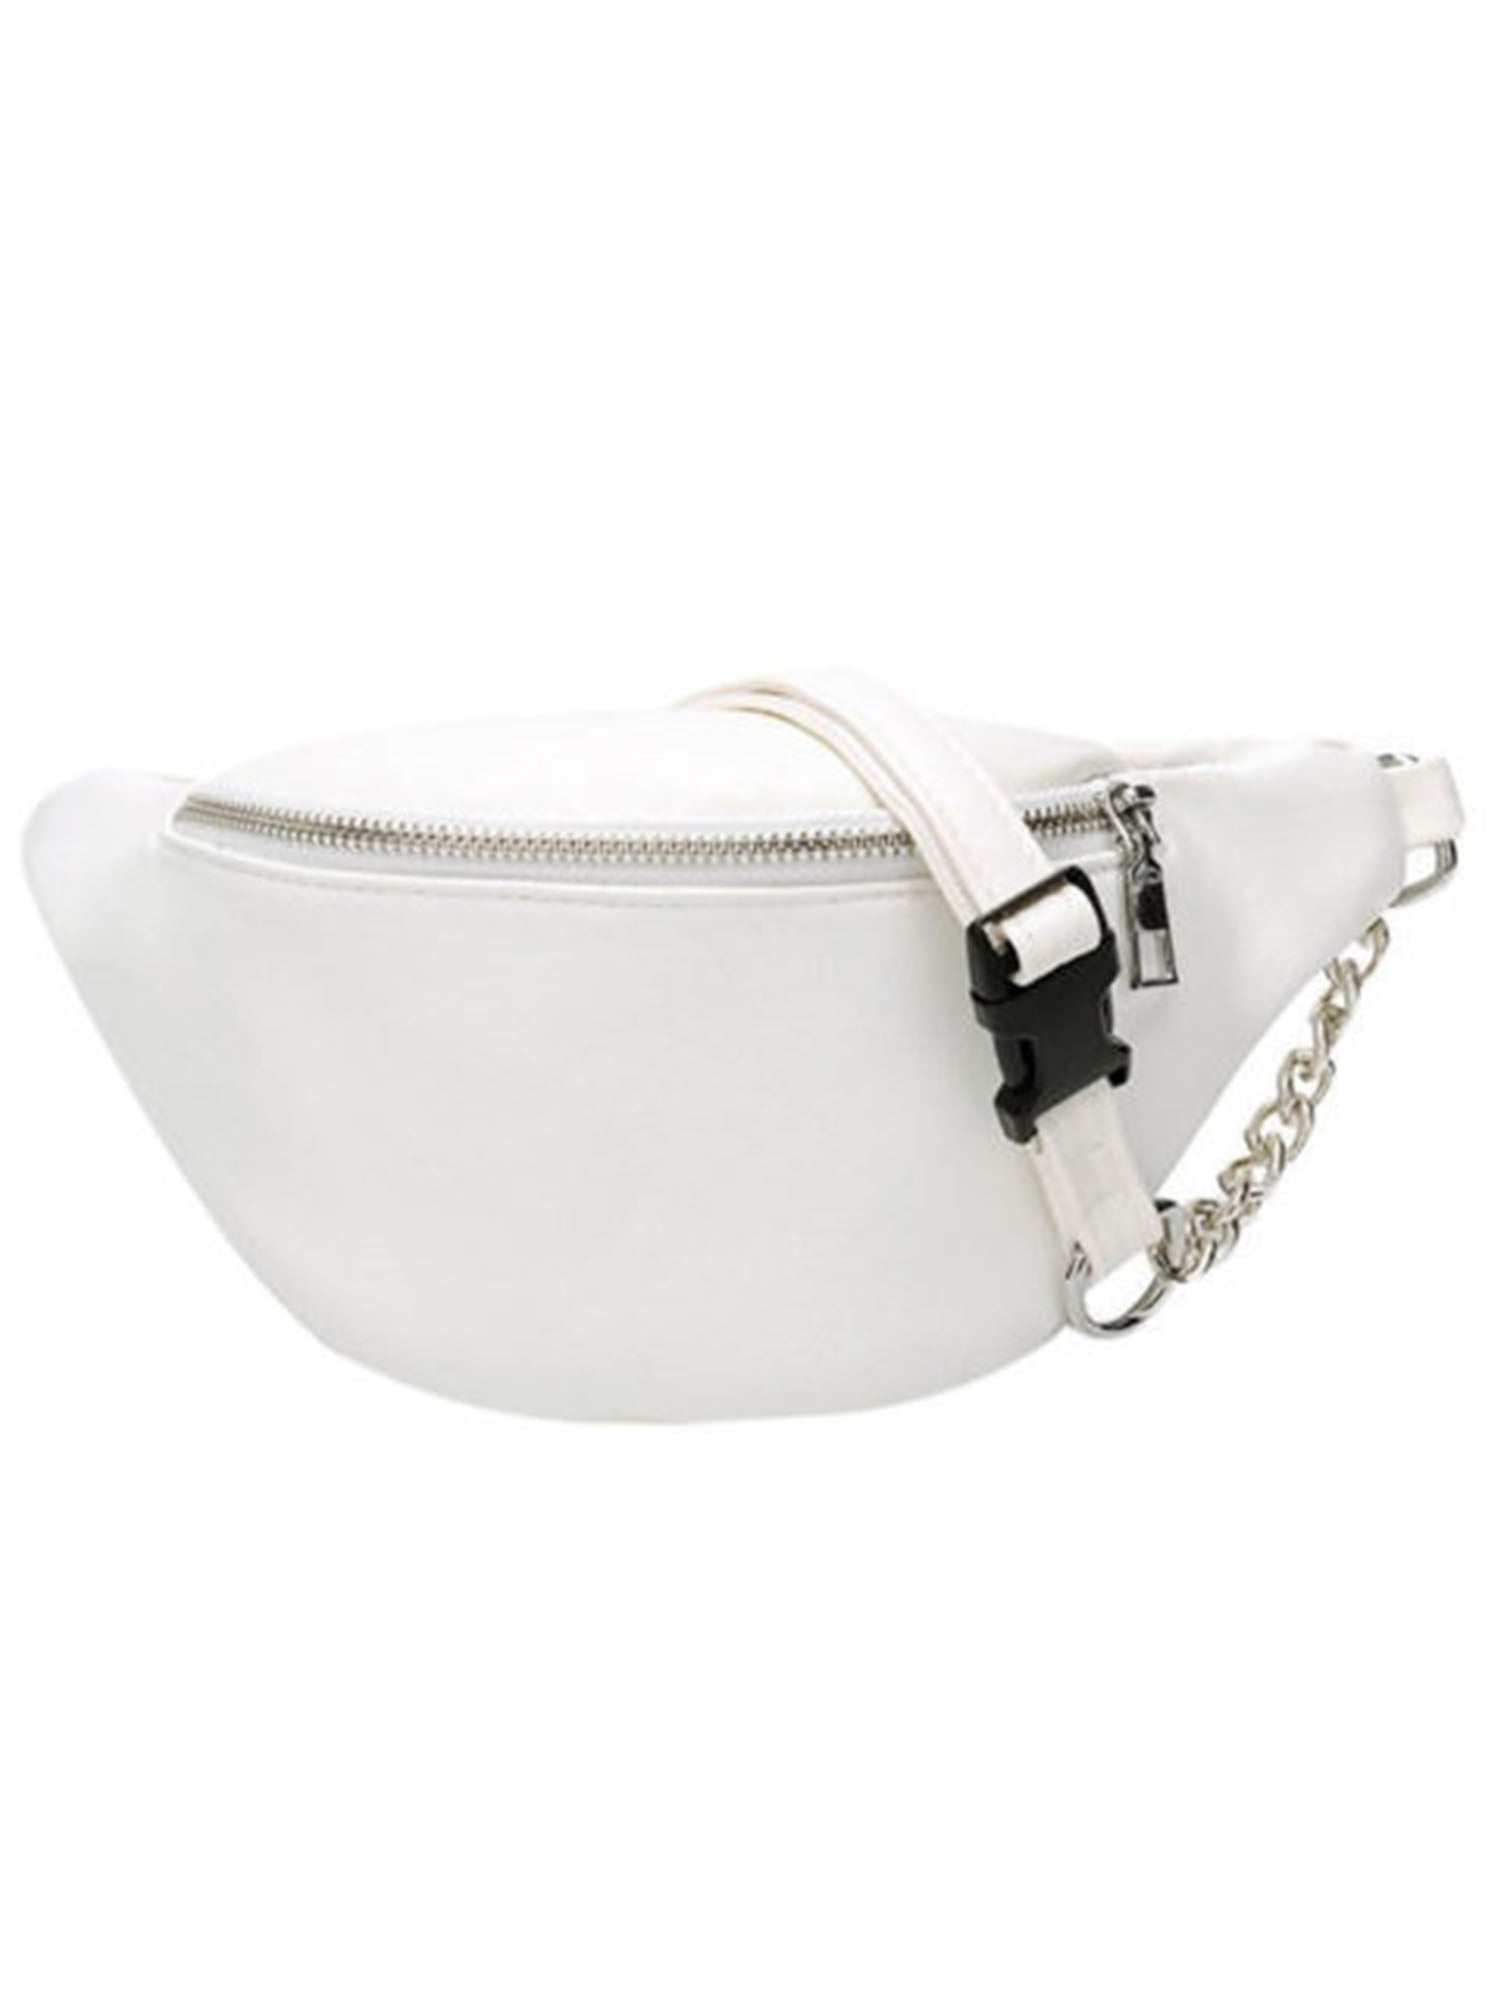 Bmnmsl Waist Pack Belt Bag For Women Girl Pouch Travel Hip Bum Bag Mini ...